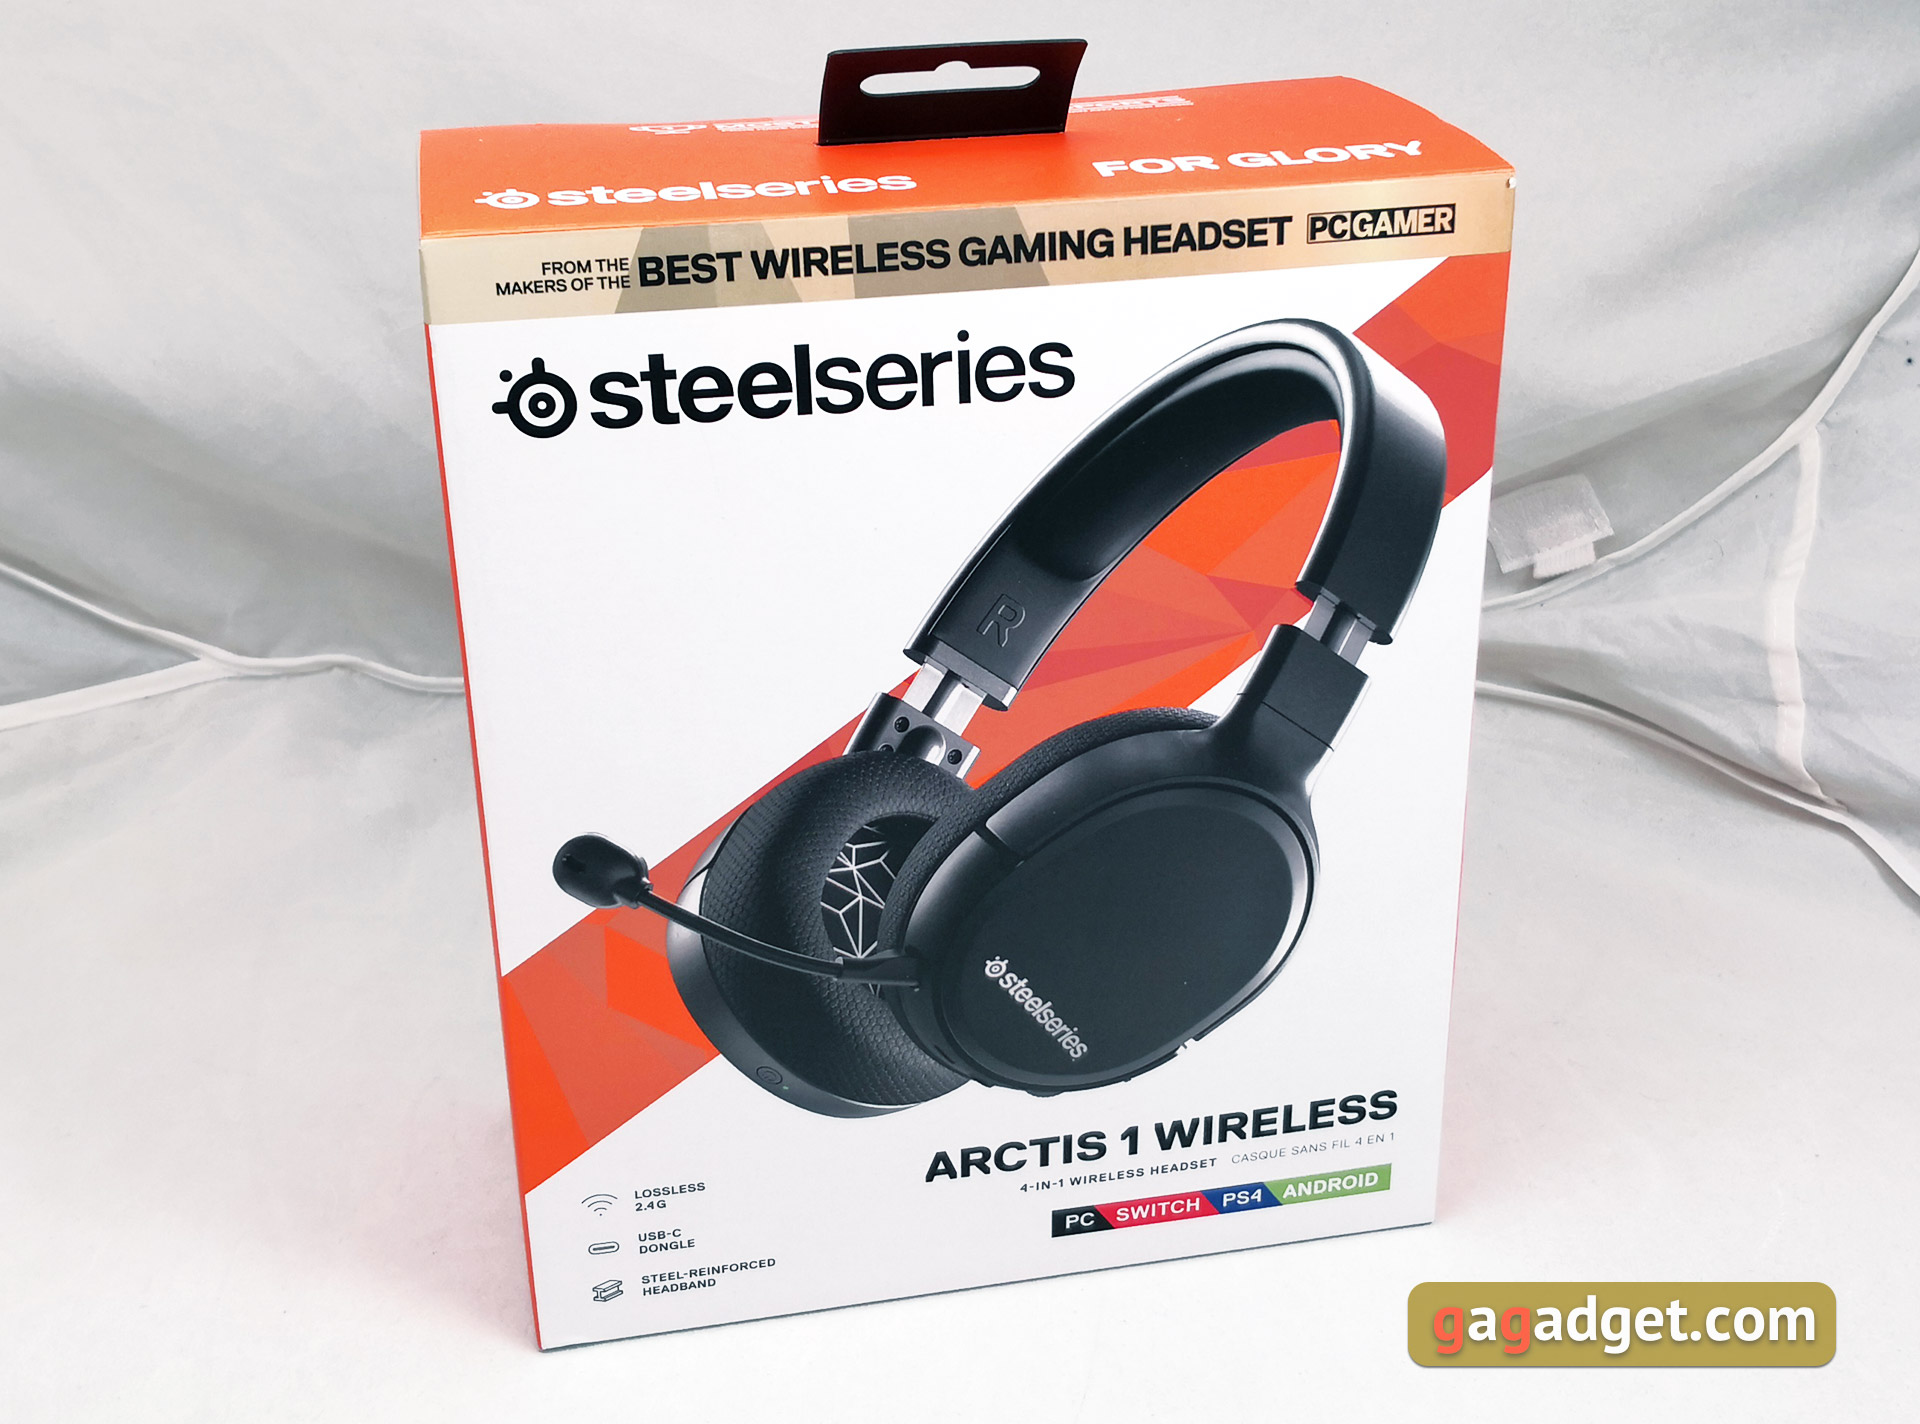 Steelseries Arctis 1ワイヤレスレビュー すべてのプラットフォーム用のワイヤレスゲームヘッドセット Geek Tech Online